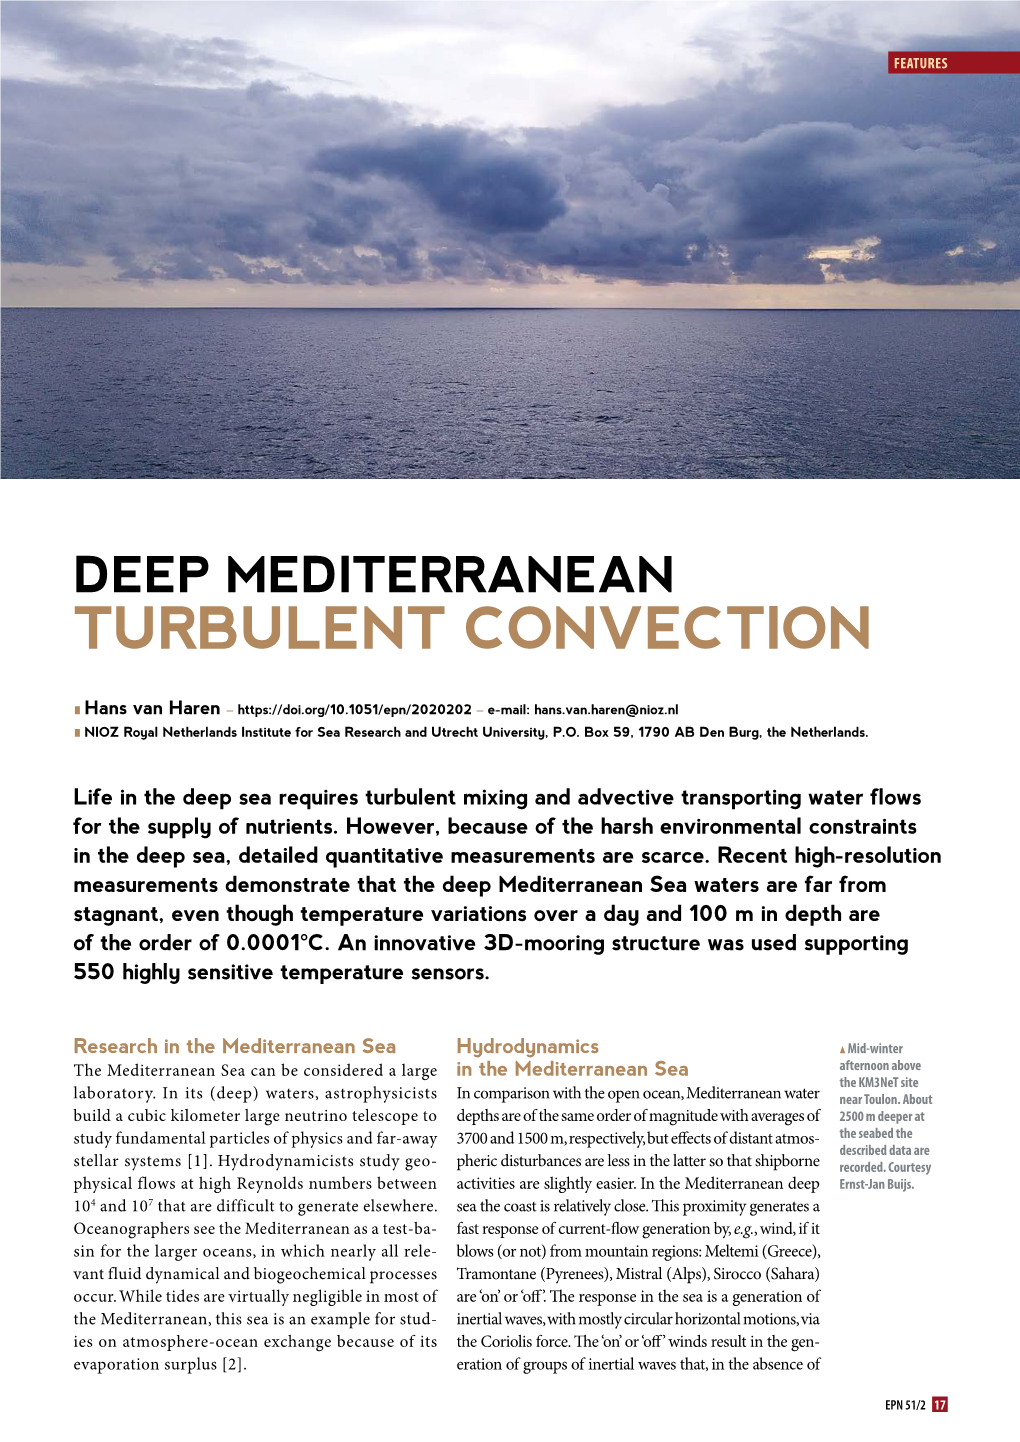 Deep Mediterranean Turbulent Convection